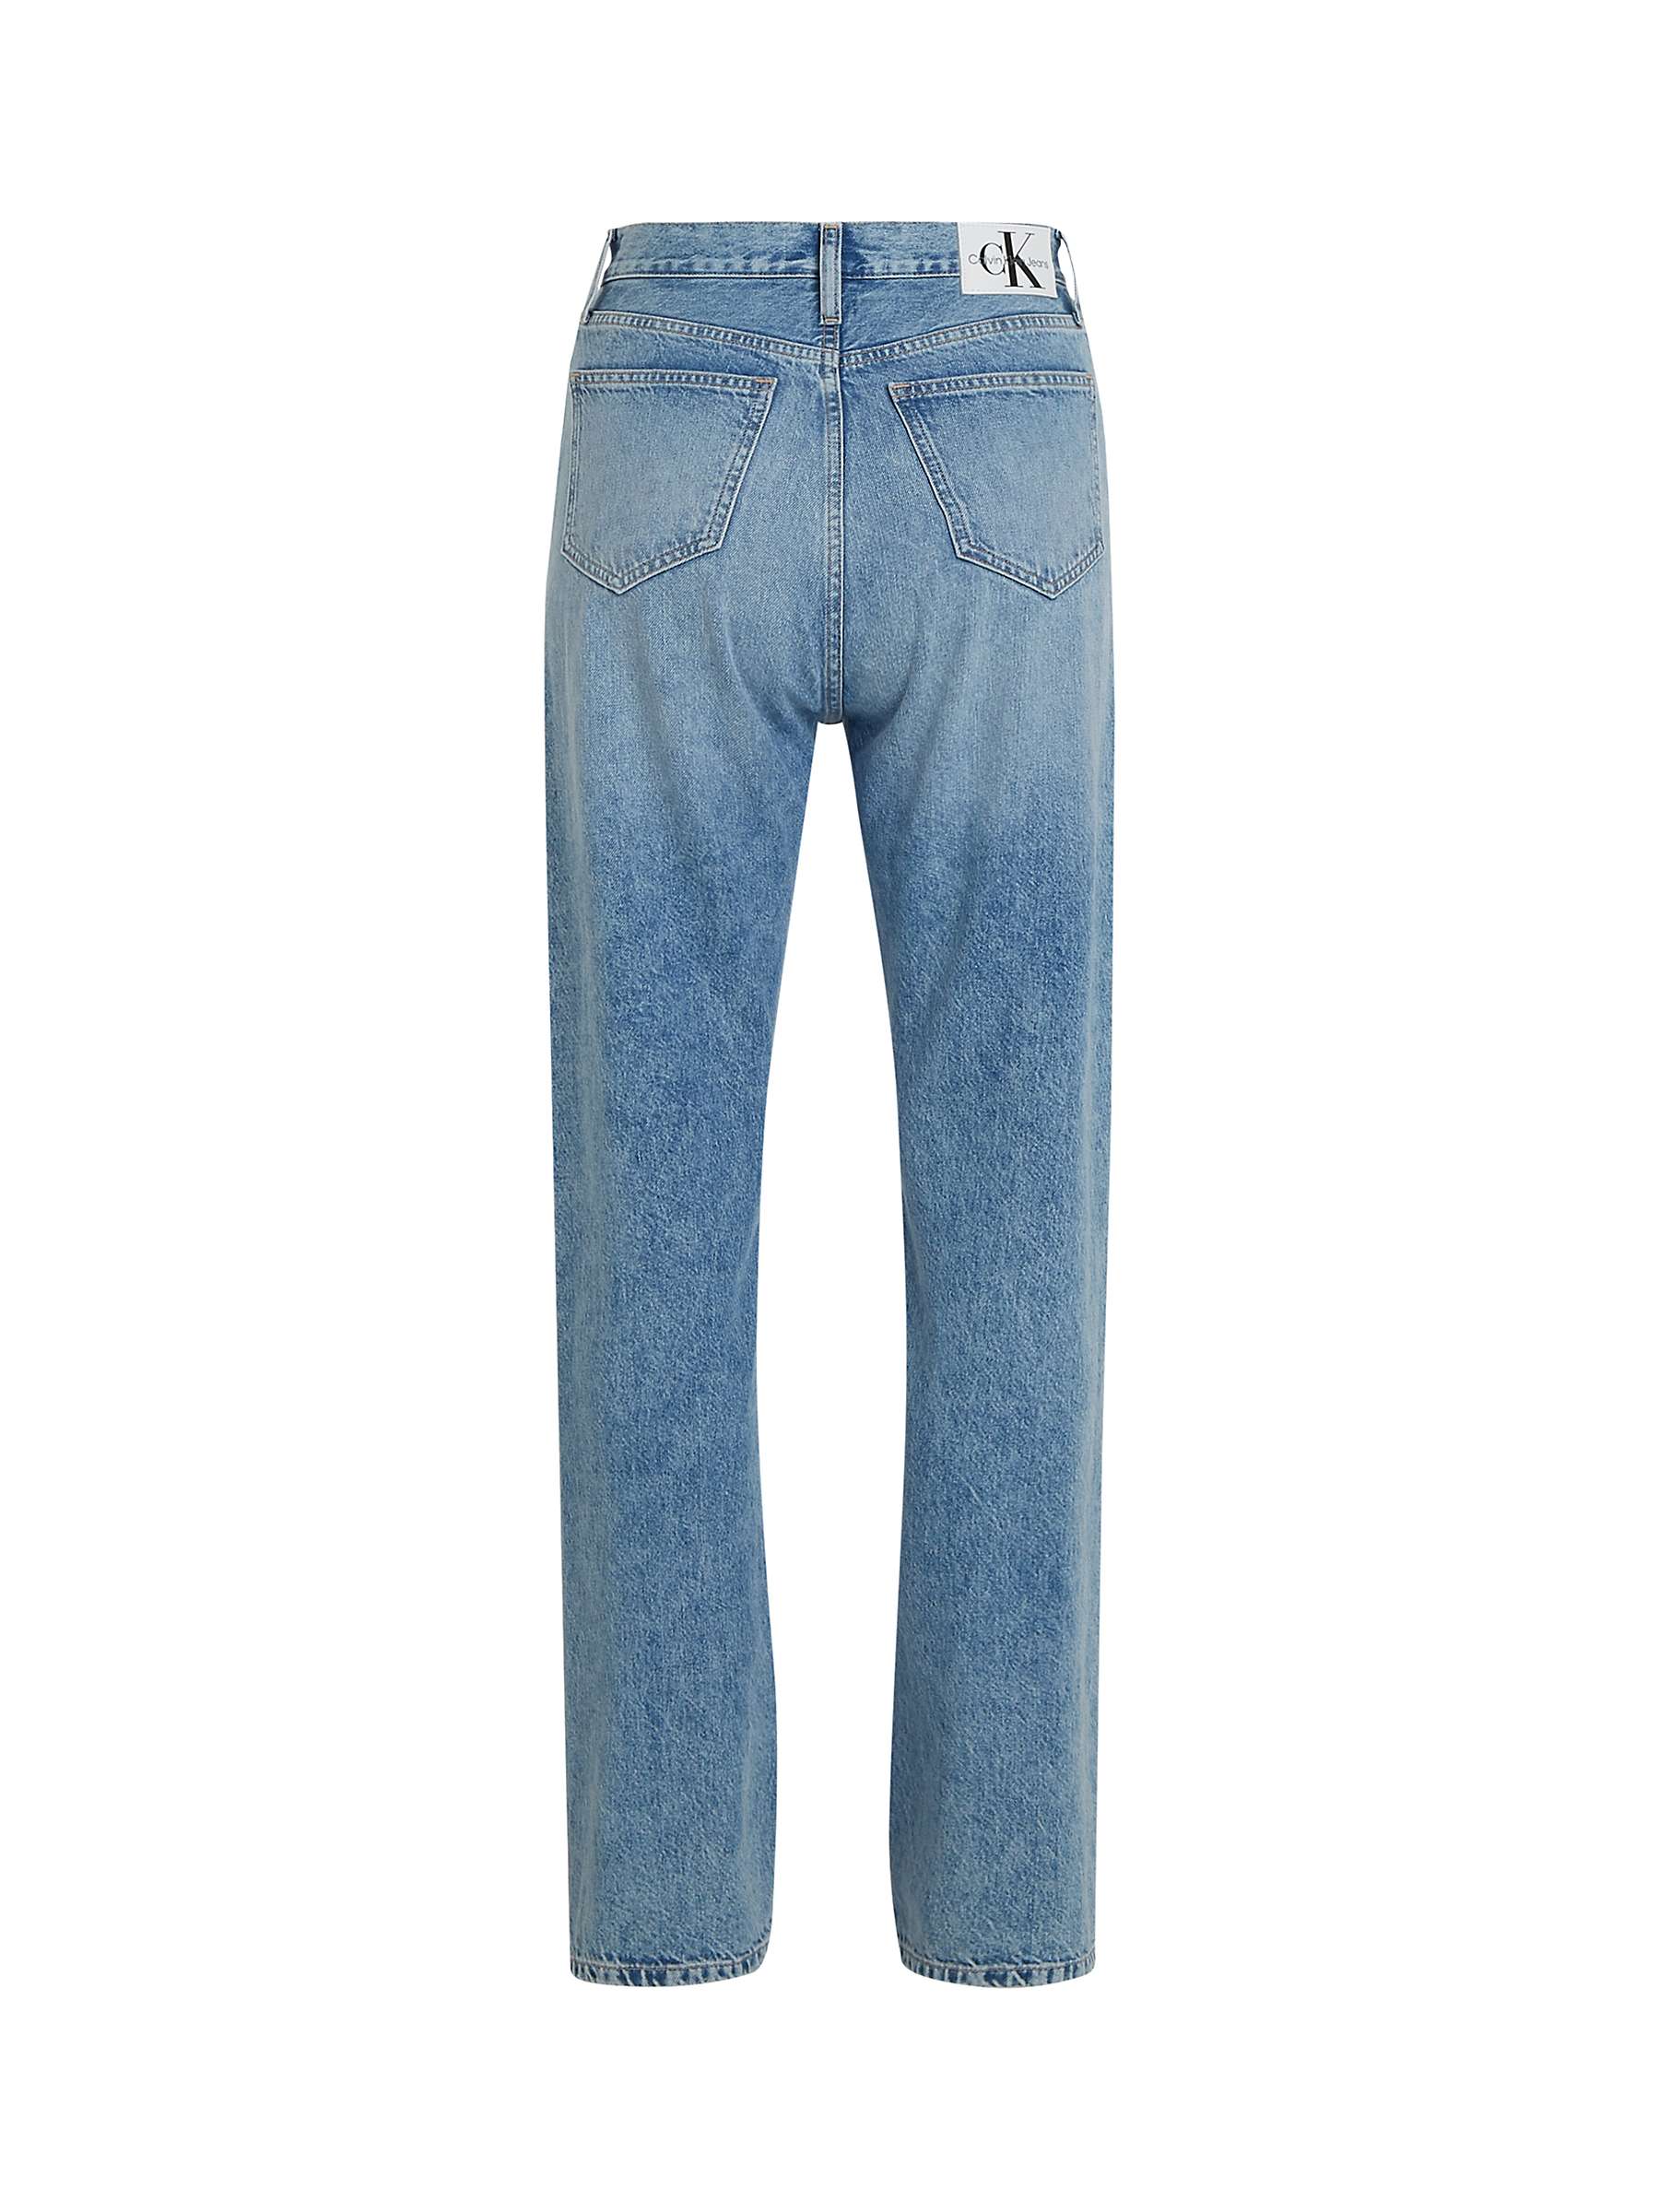 Buy Calvin Klein High Rise Straight Leg Jeans, Light Blue Online at johnlewis.com